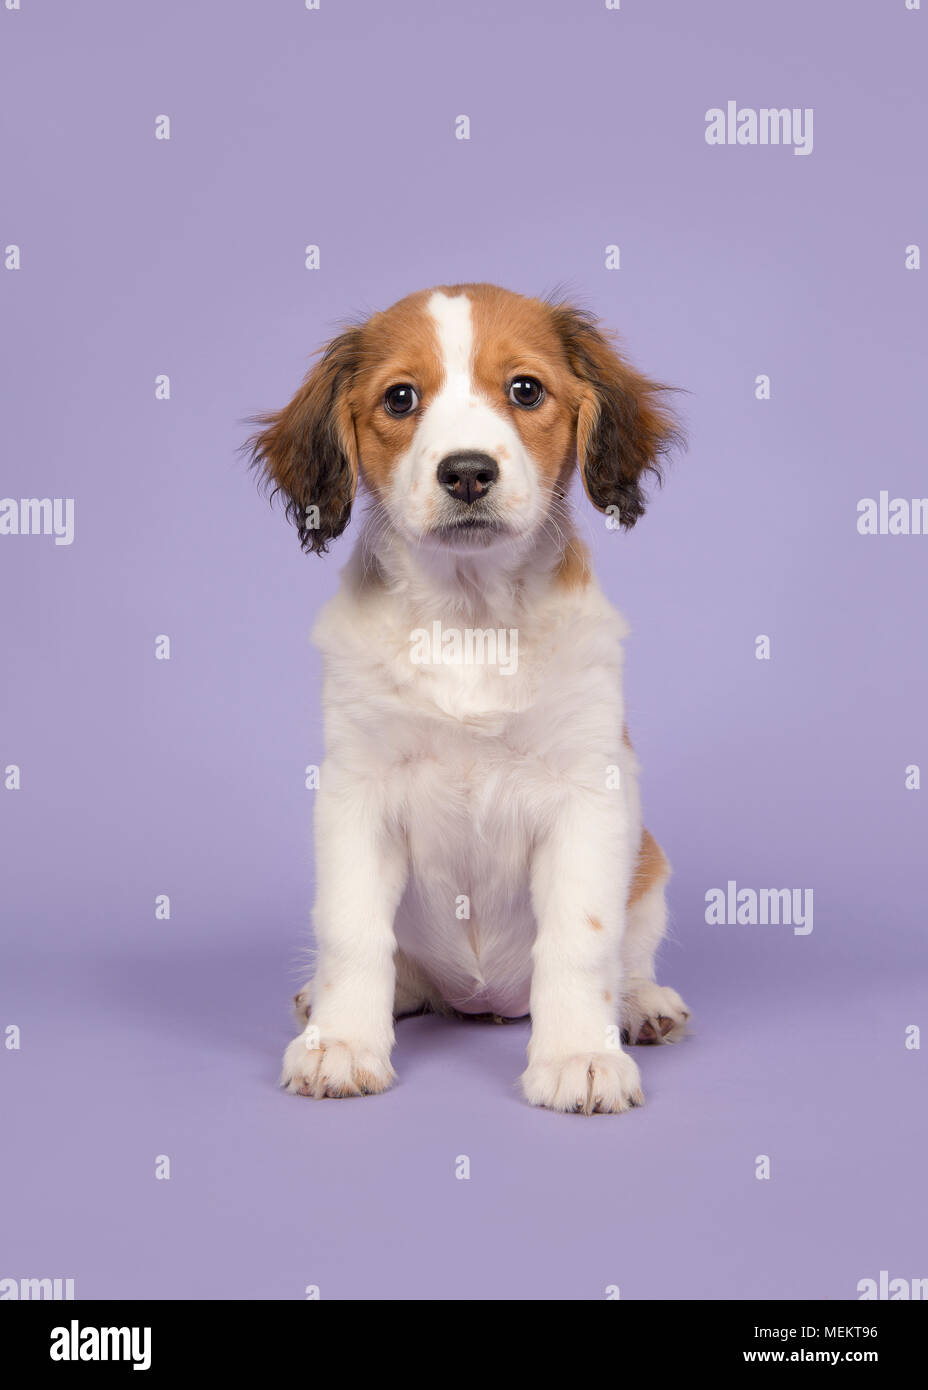 Adorable kooikerhondje puppy sitting on a purple background Stock Photo